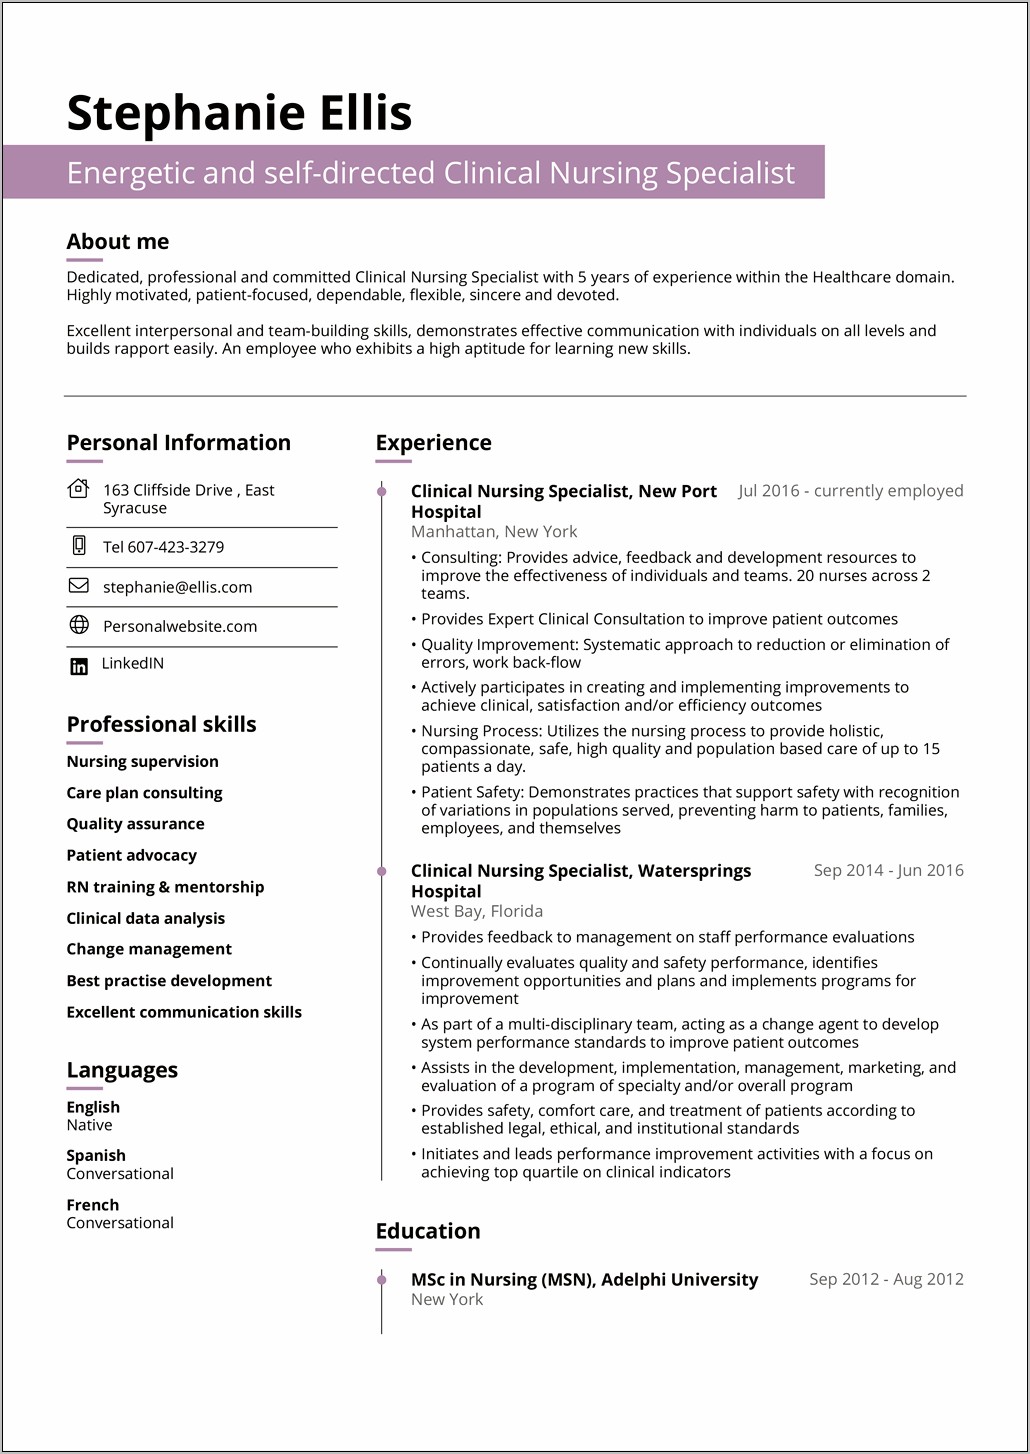 job-application-printable-blank-resume-form-resume-example-gallery